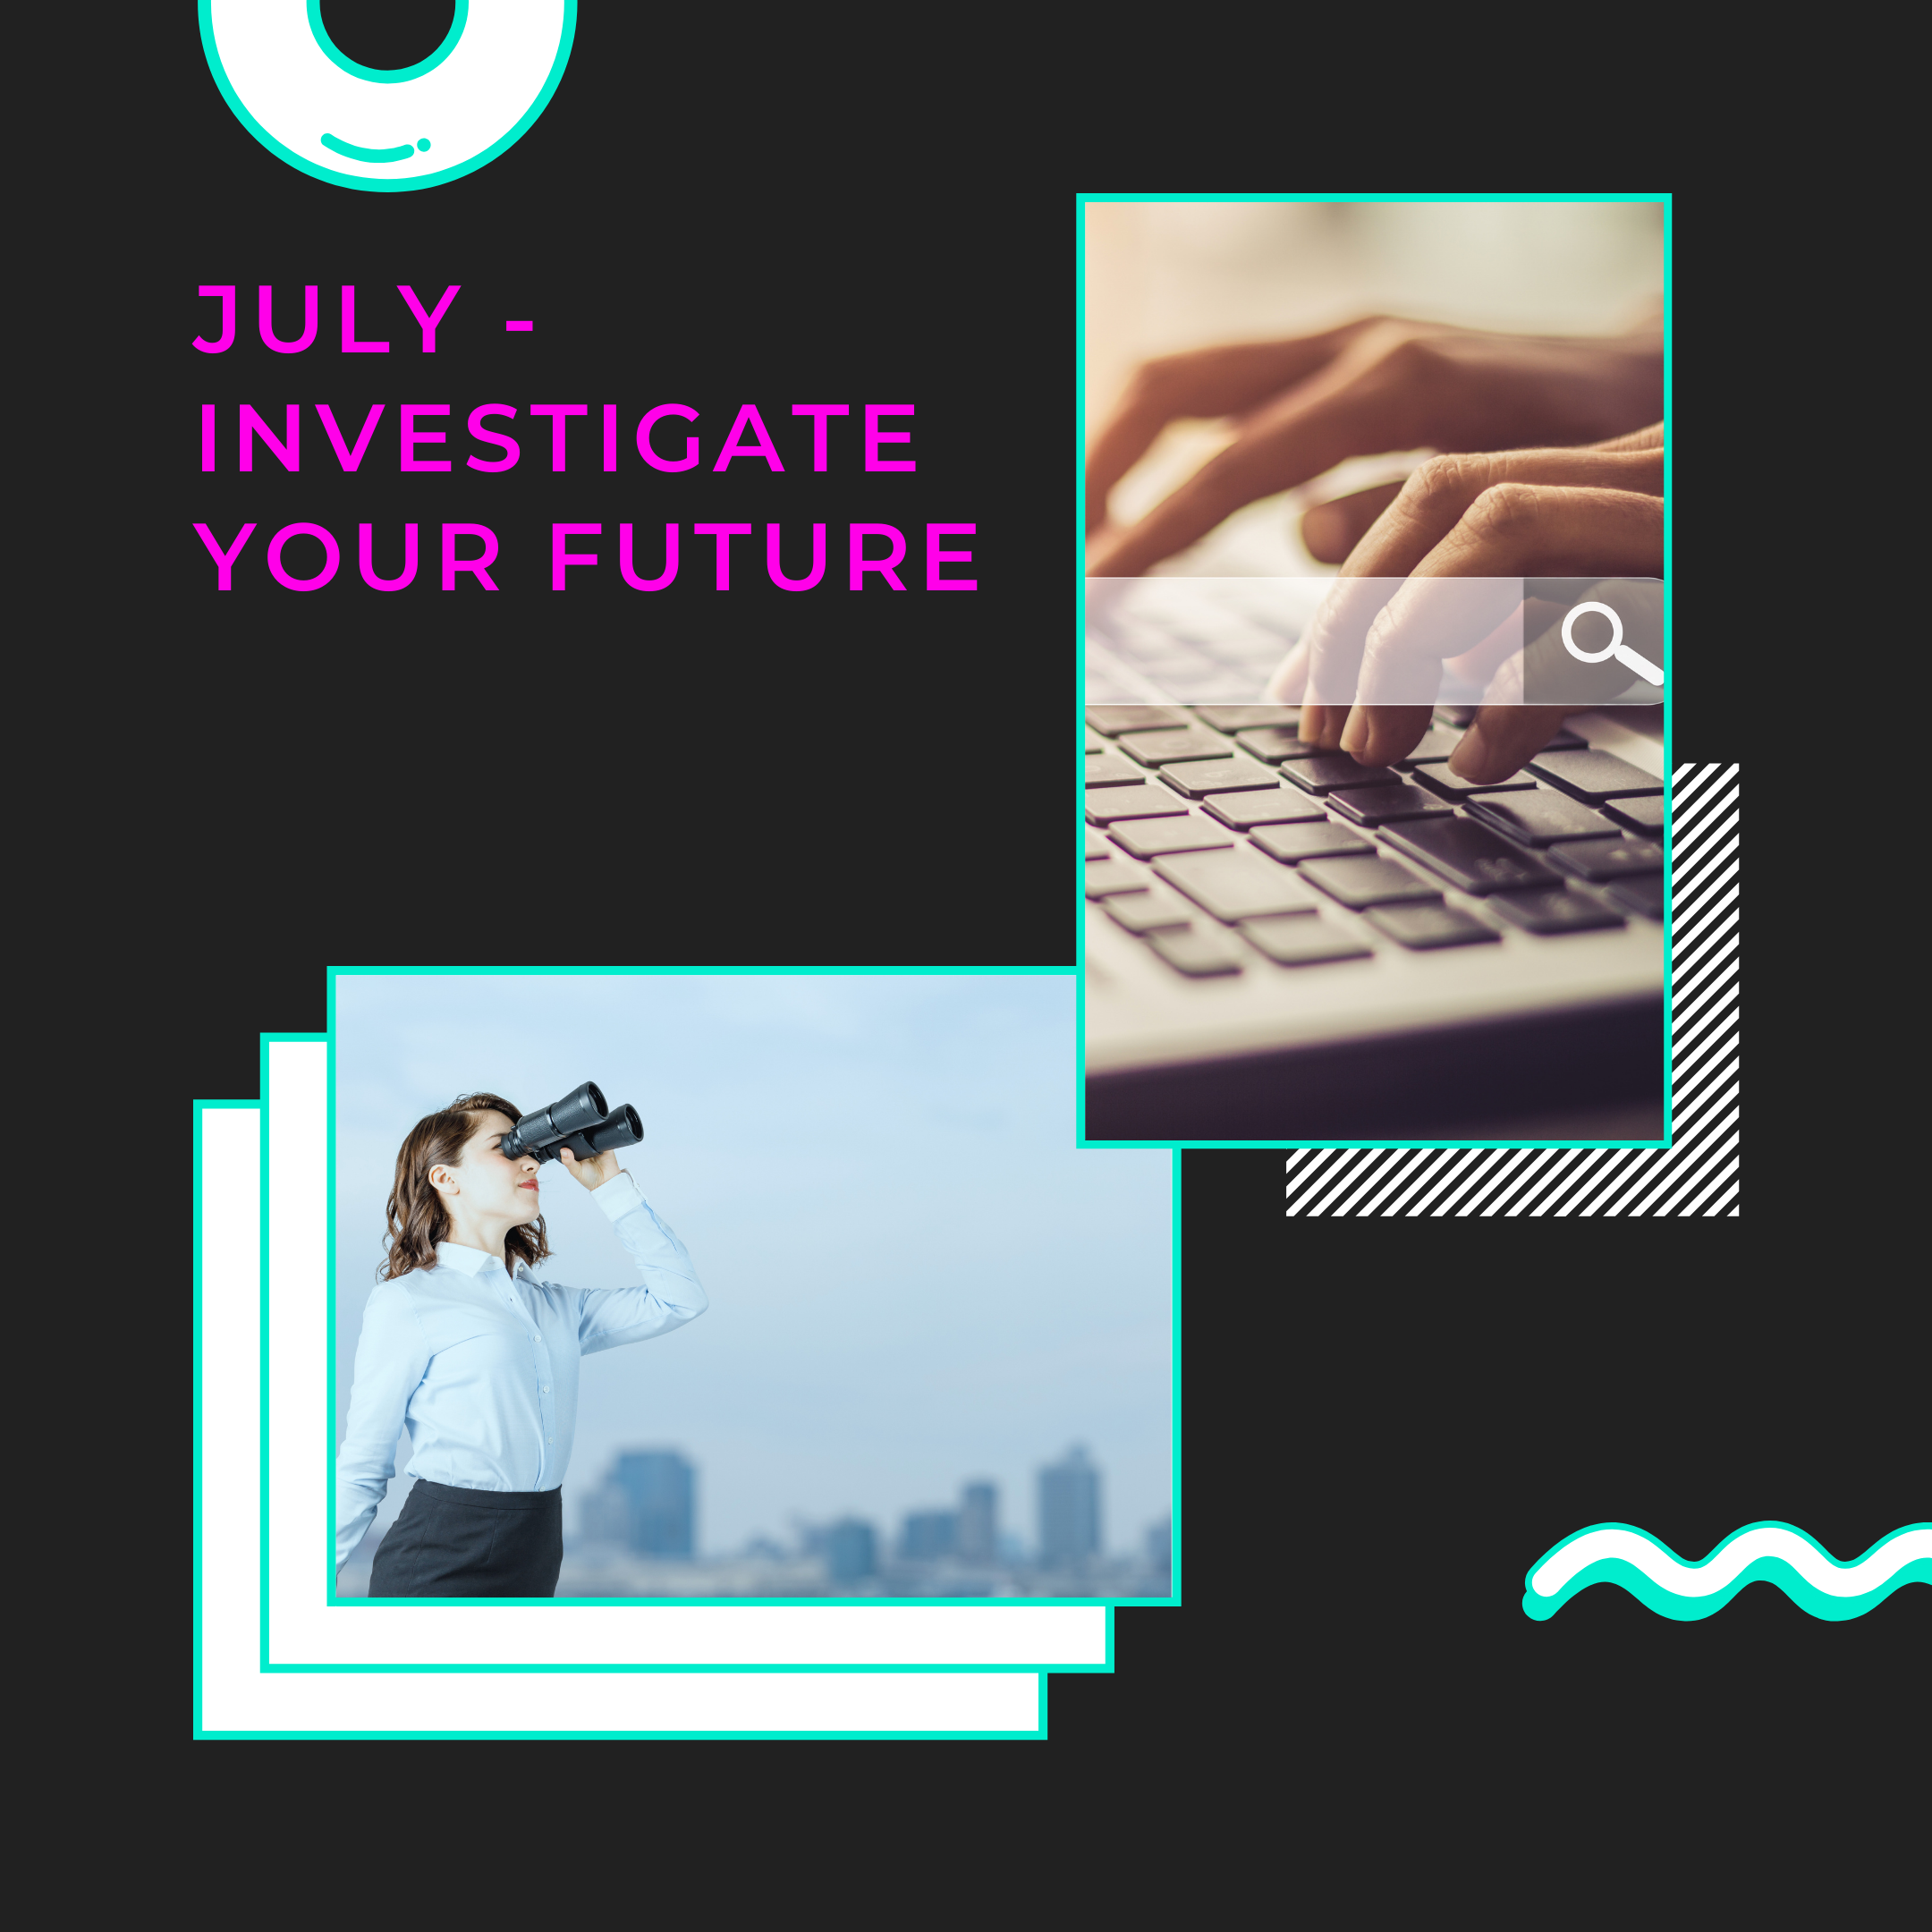 Investigate your future in July